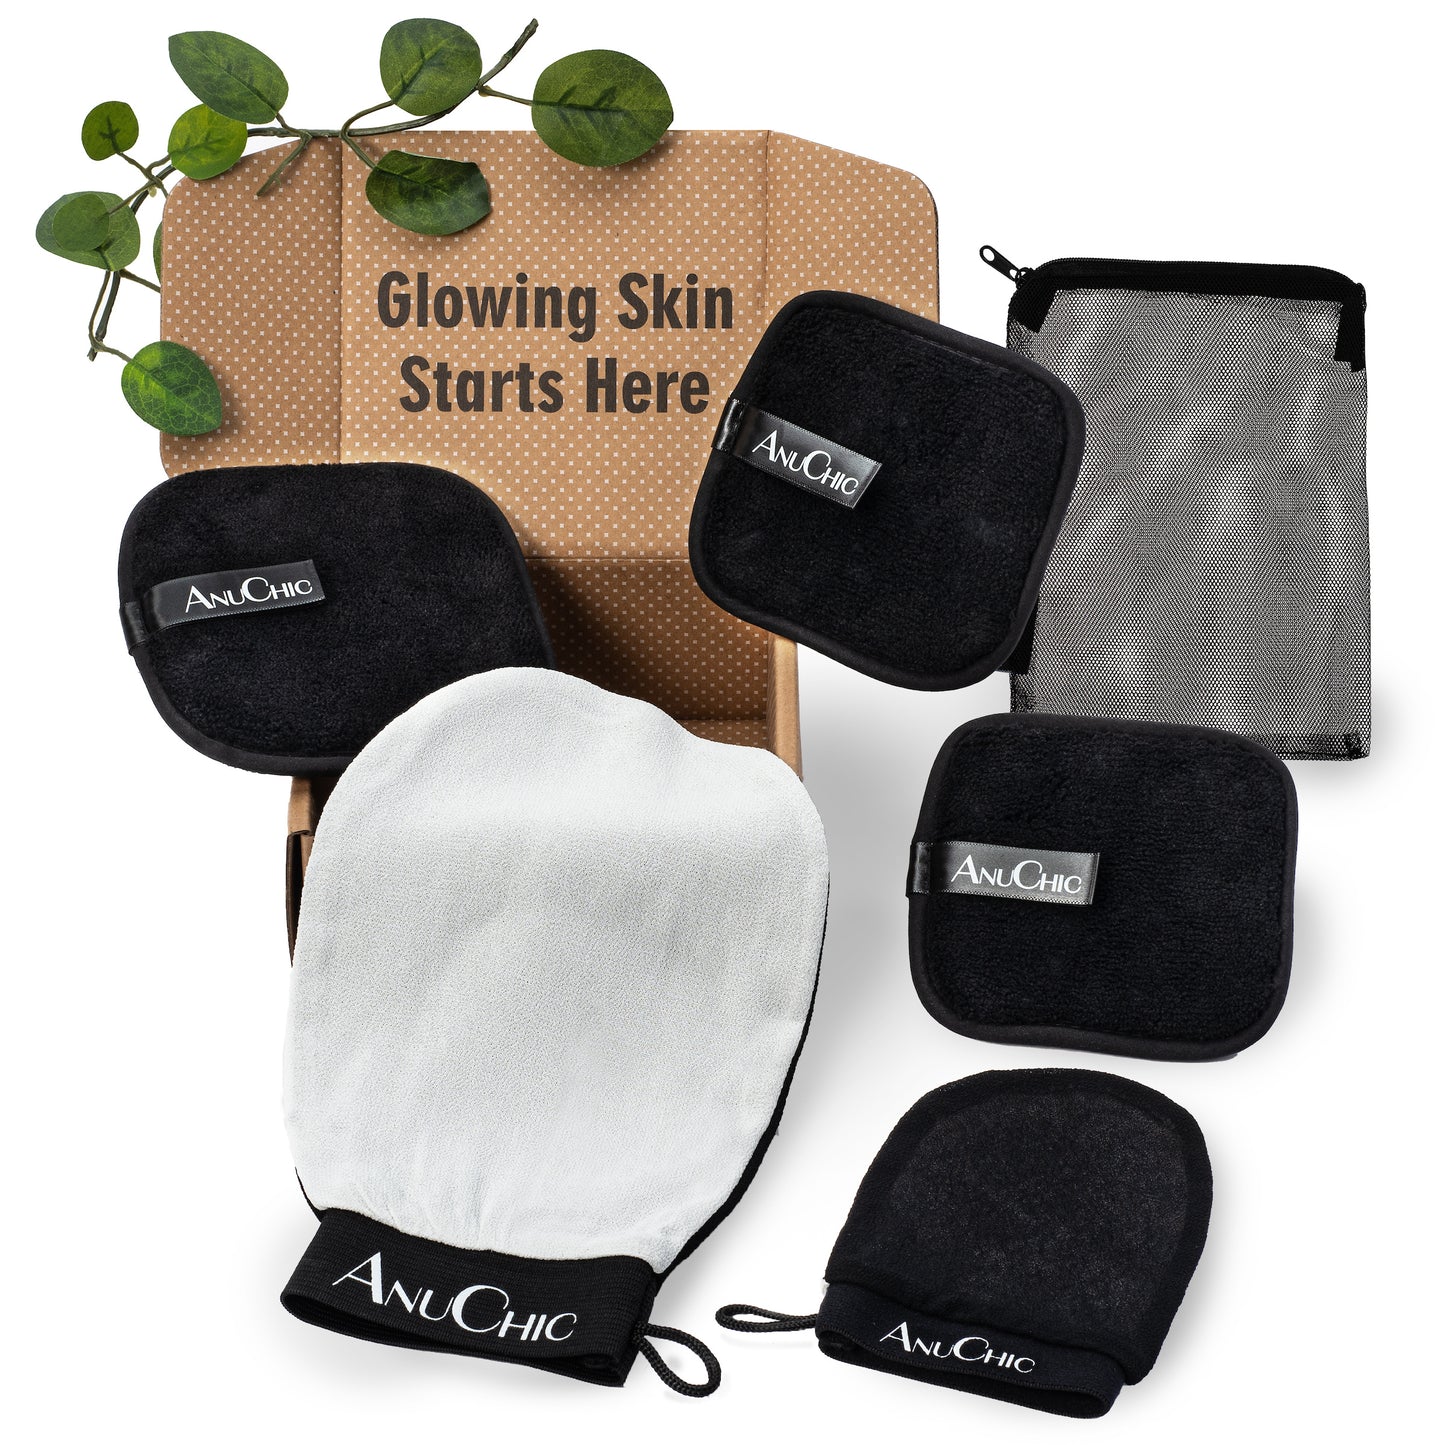 AnuChic Clean Skin Kit